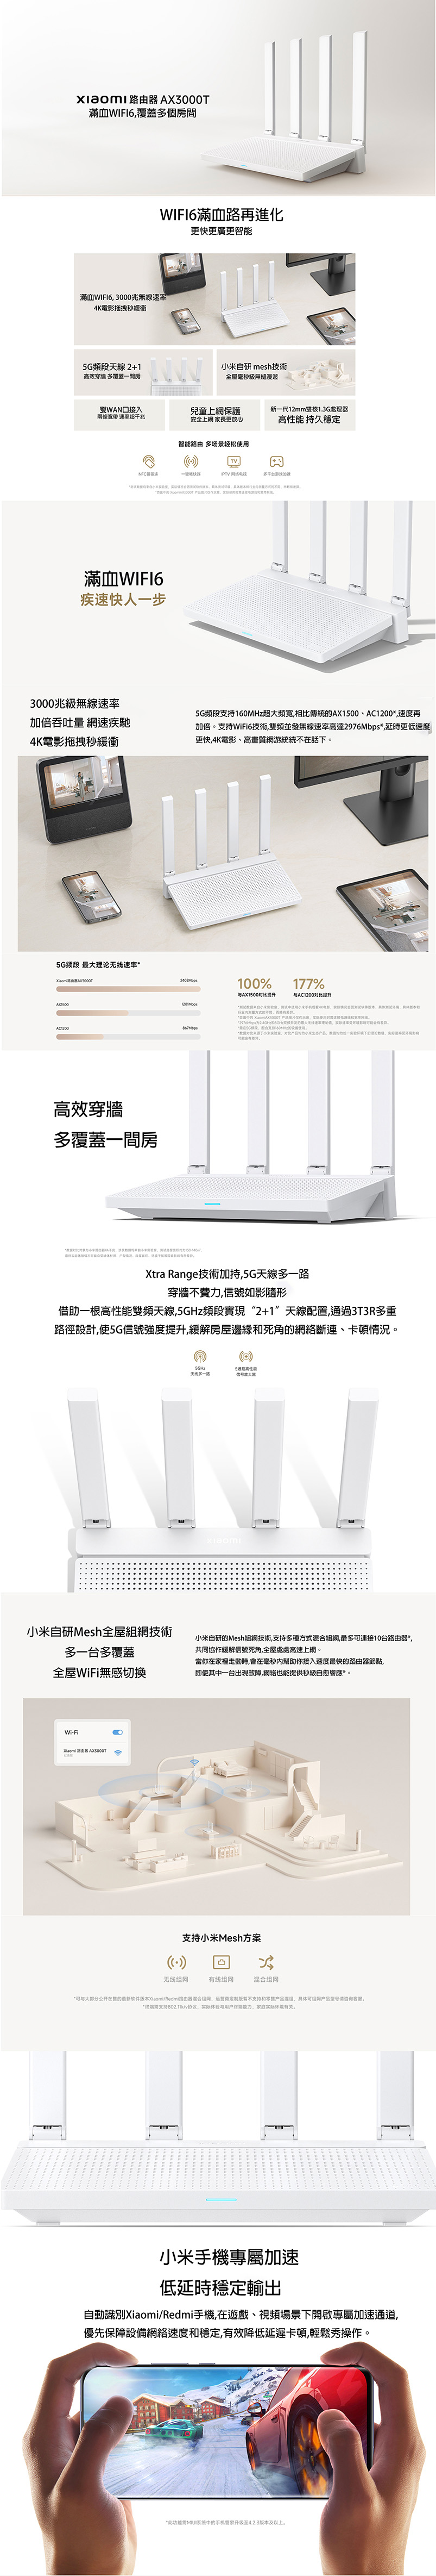 Xiaomi Router AX3000T 